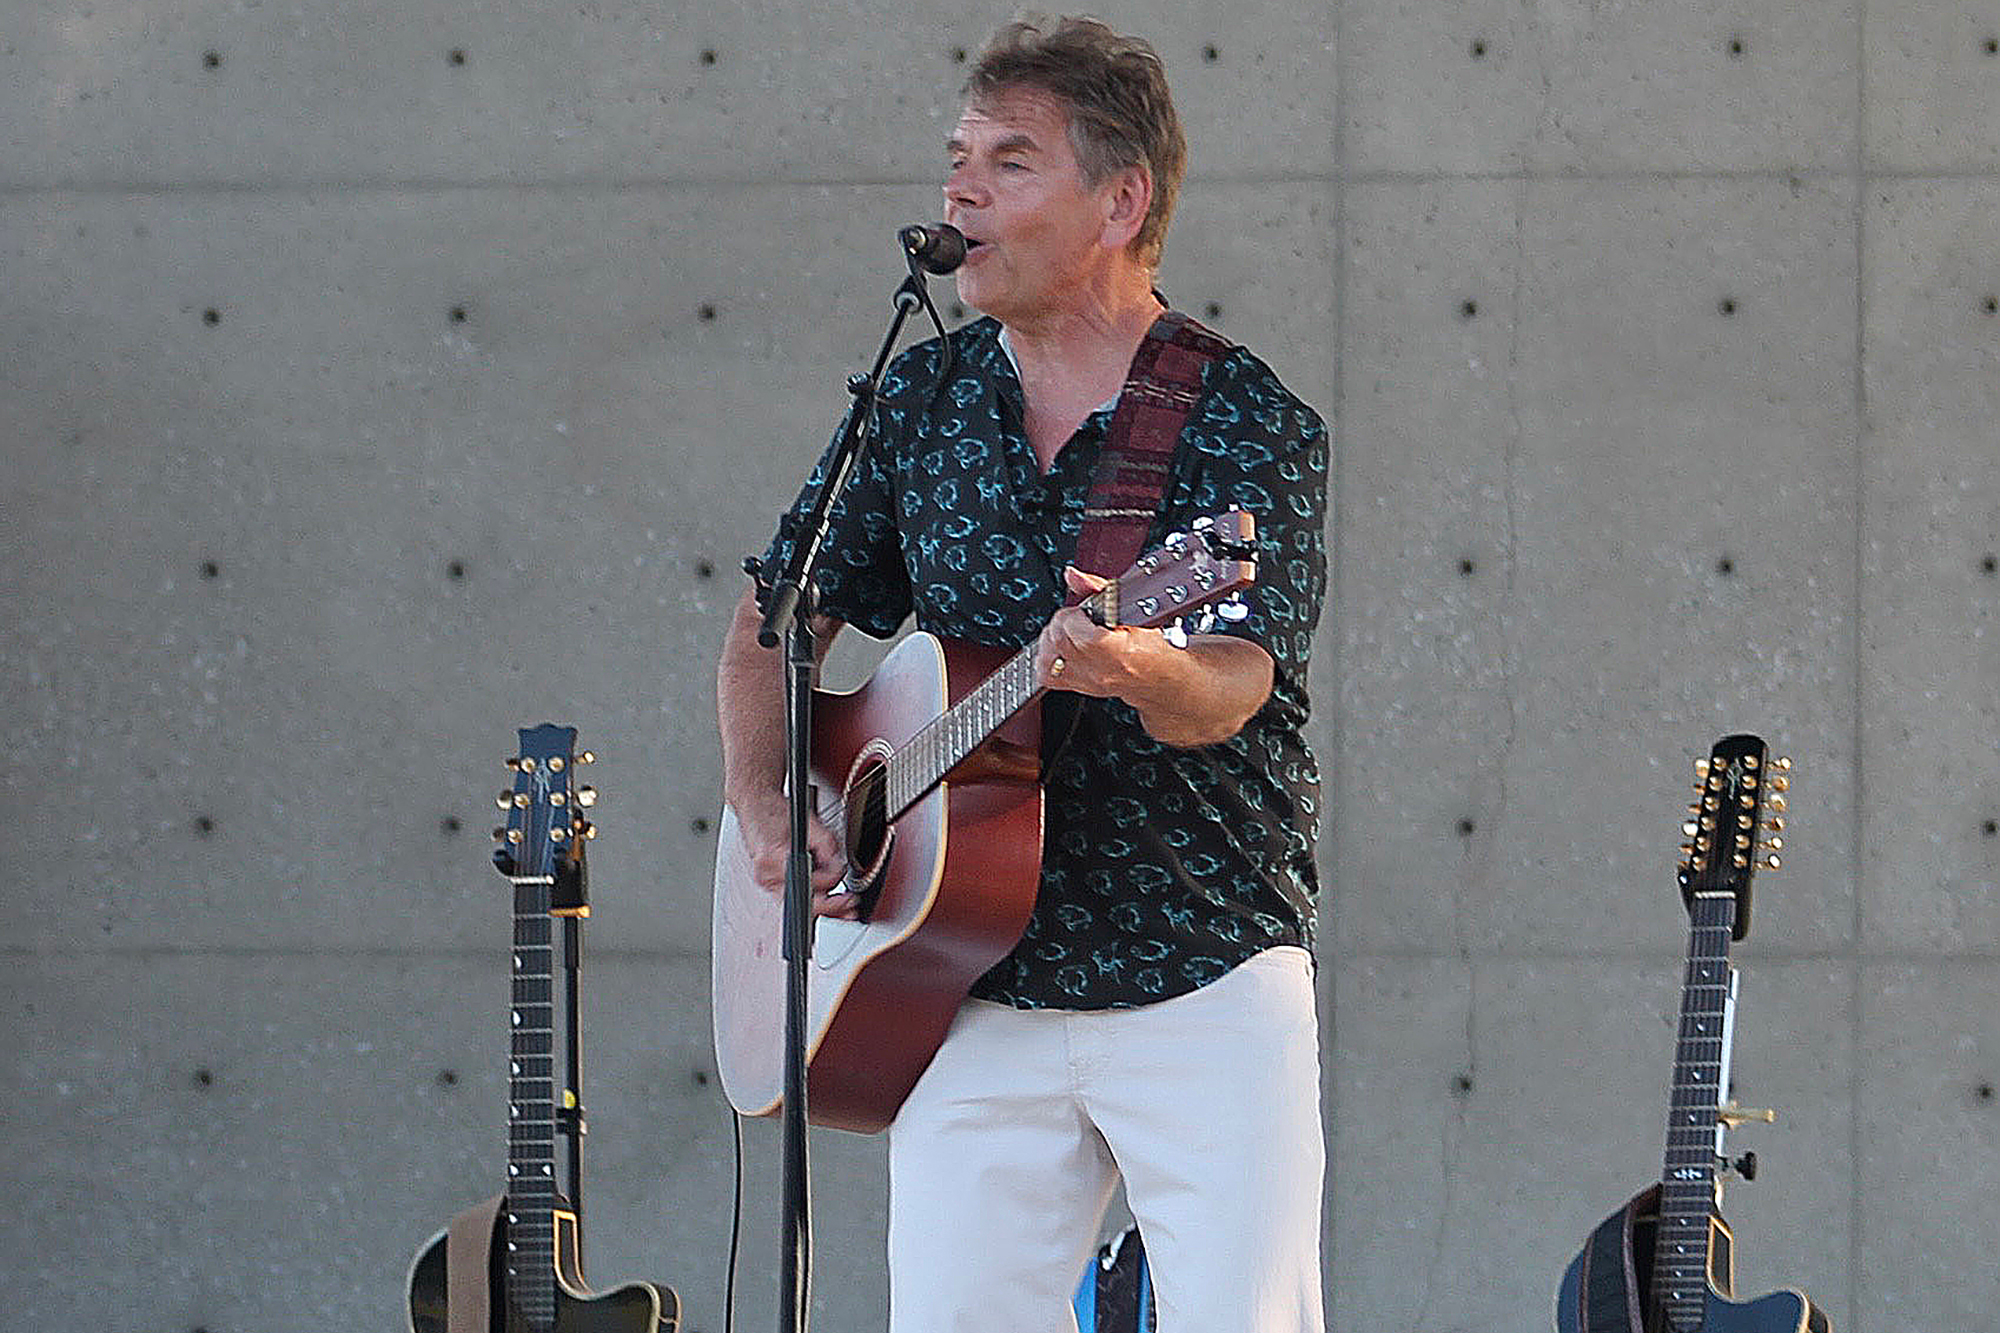 Richard Janik performing at the Sunset Amphitheatre